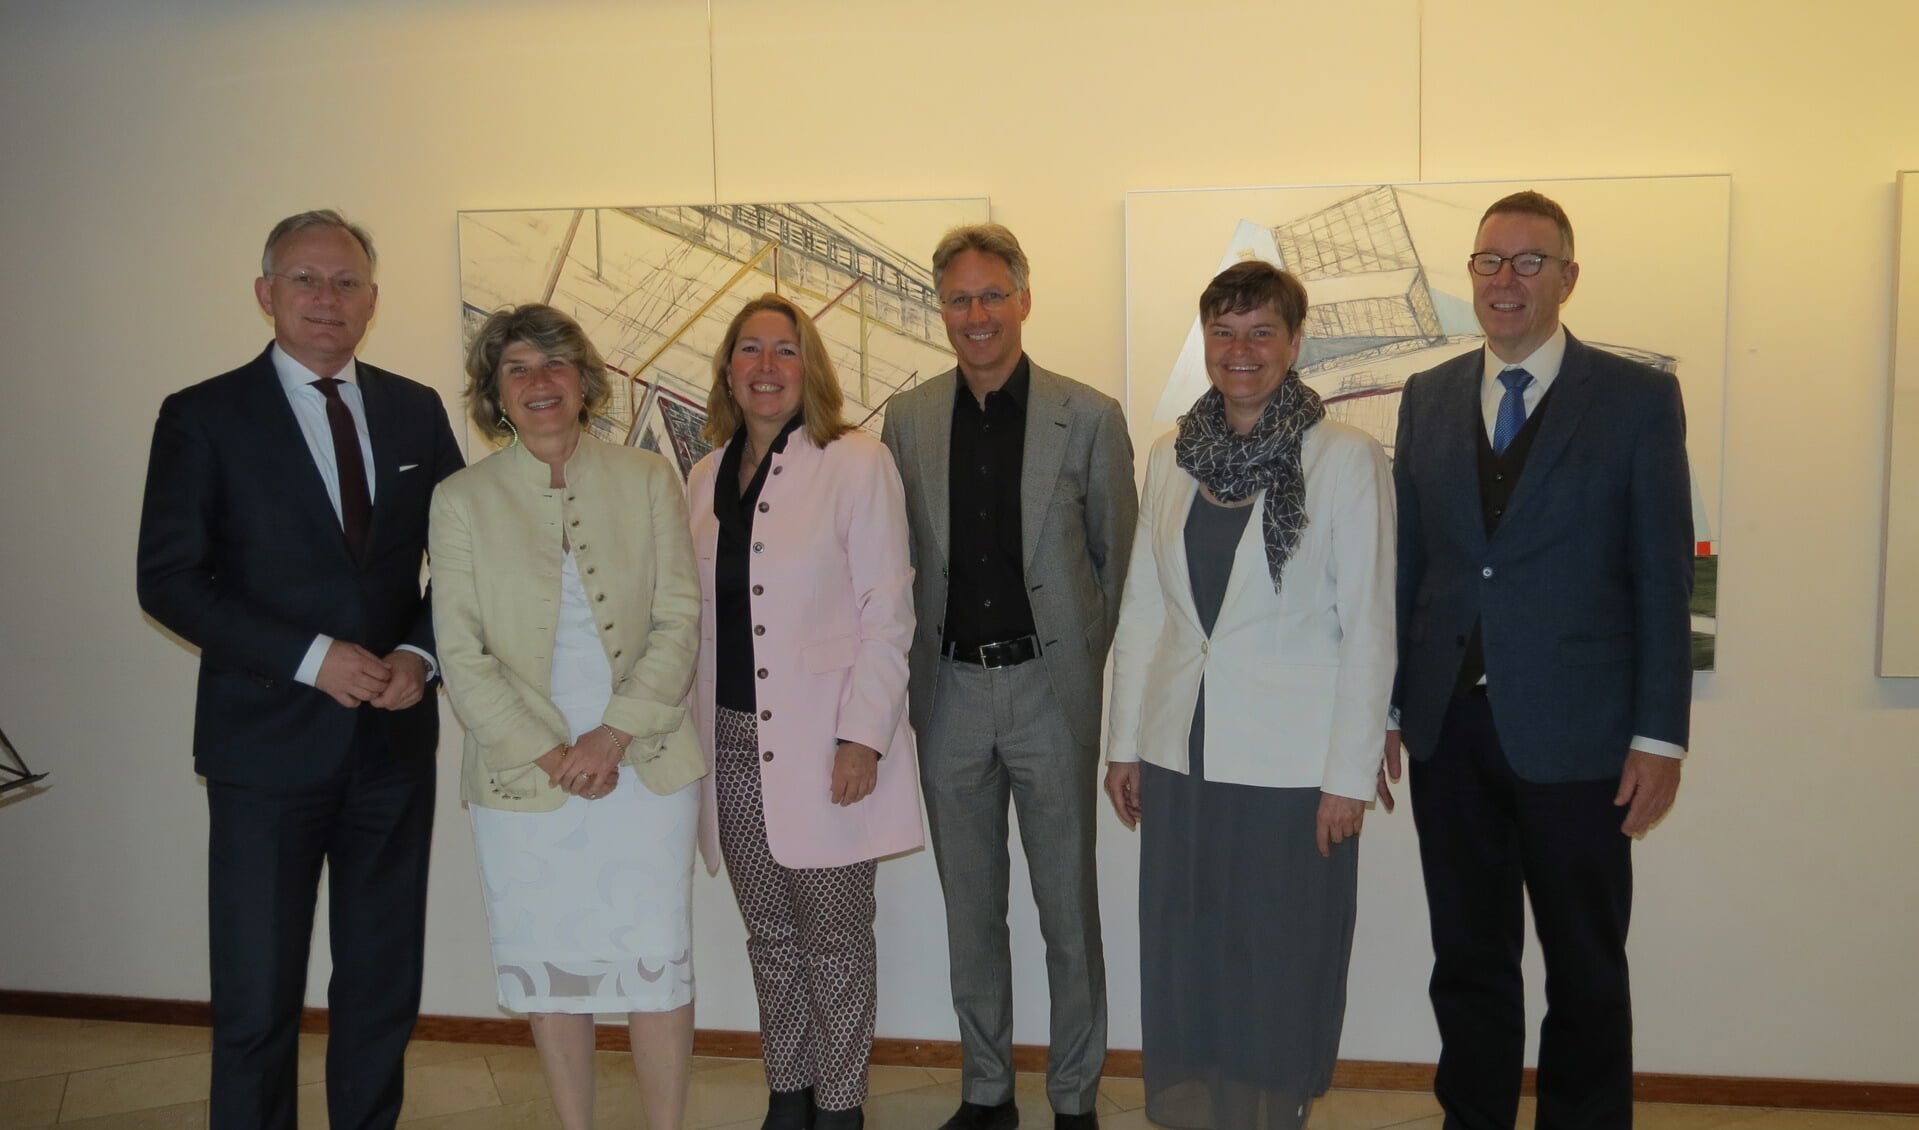 V.l.n.r. burgemeester Arjen Gerritsen, de wethouders Madeleine Bakker, Jolanda van Hulst, Hans Mieras, Anne Brommersma en gemeentesecretaris Erik Wietses.